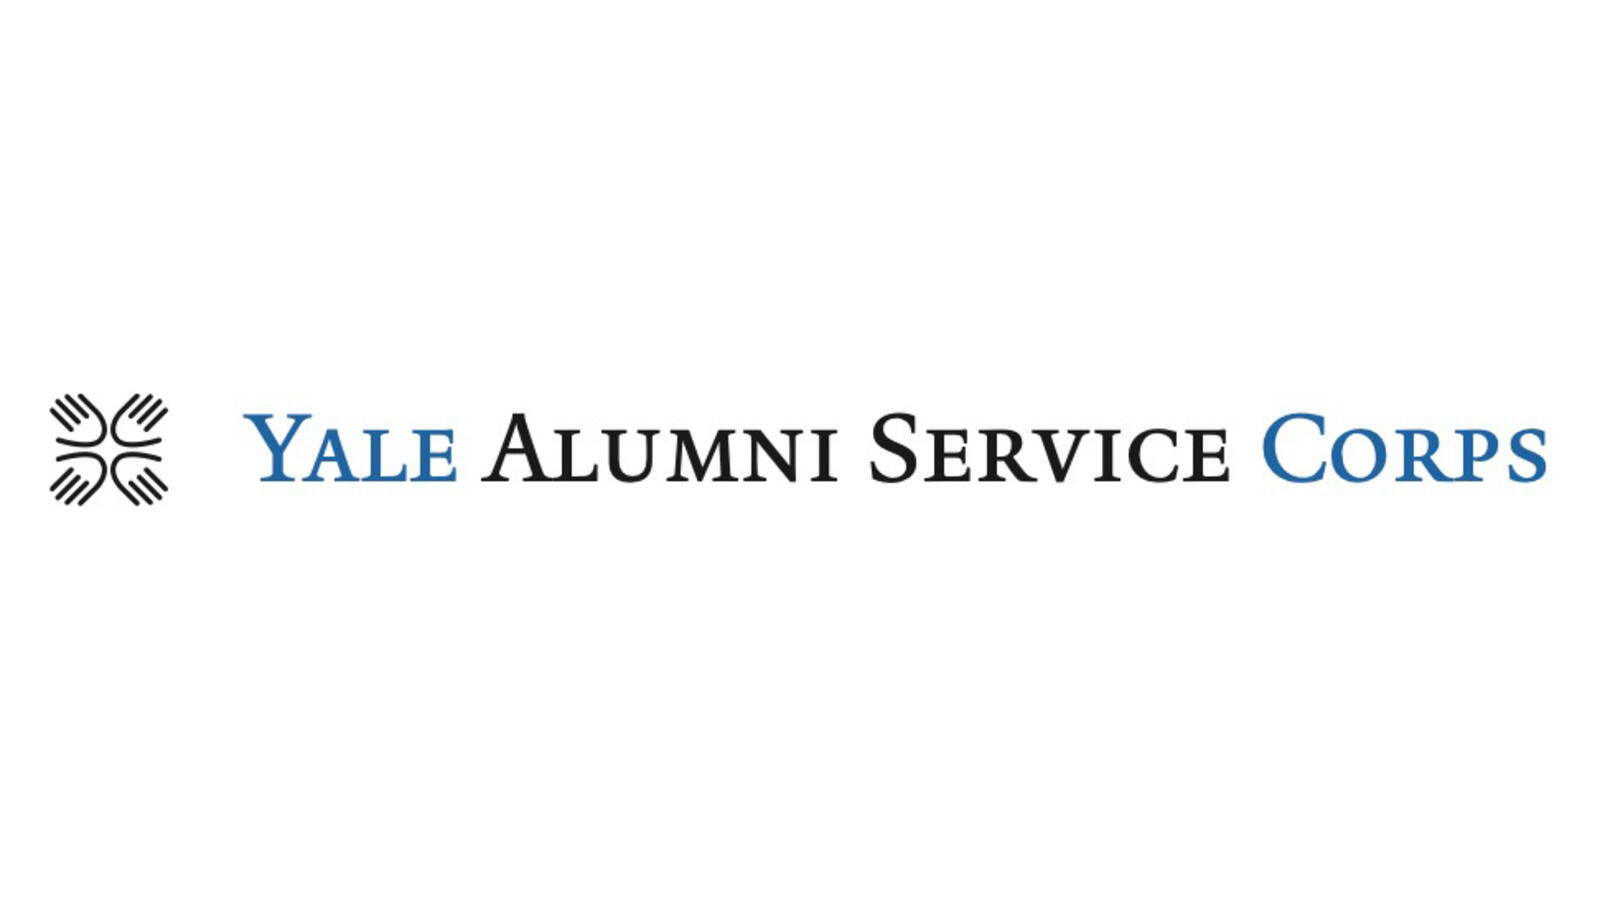 Yale Alumni Service Corps